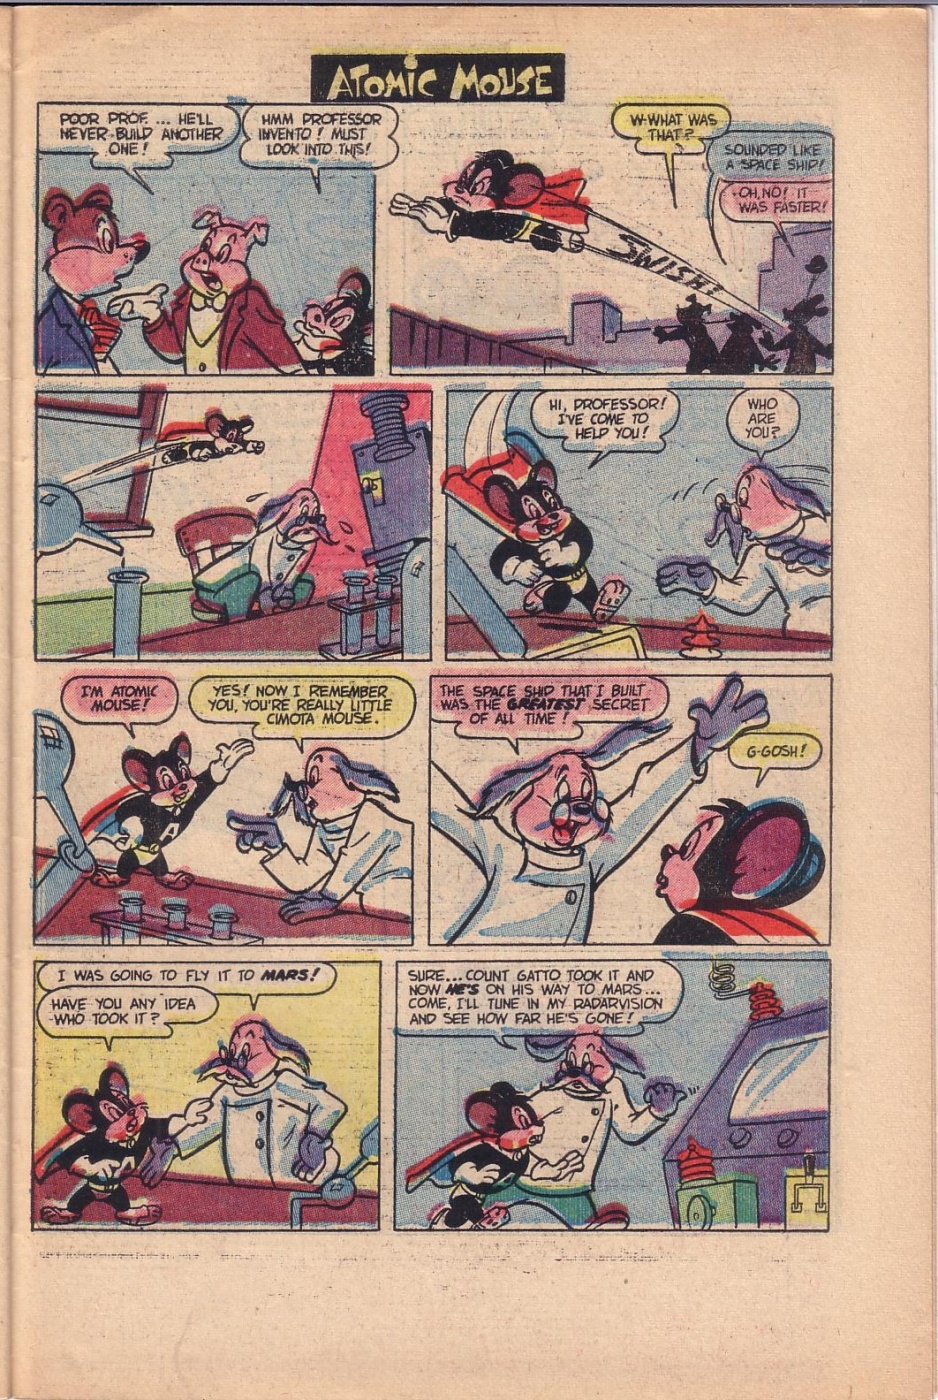 Atomic Mouse Comics - Funny Comics (27)